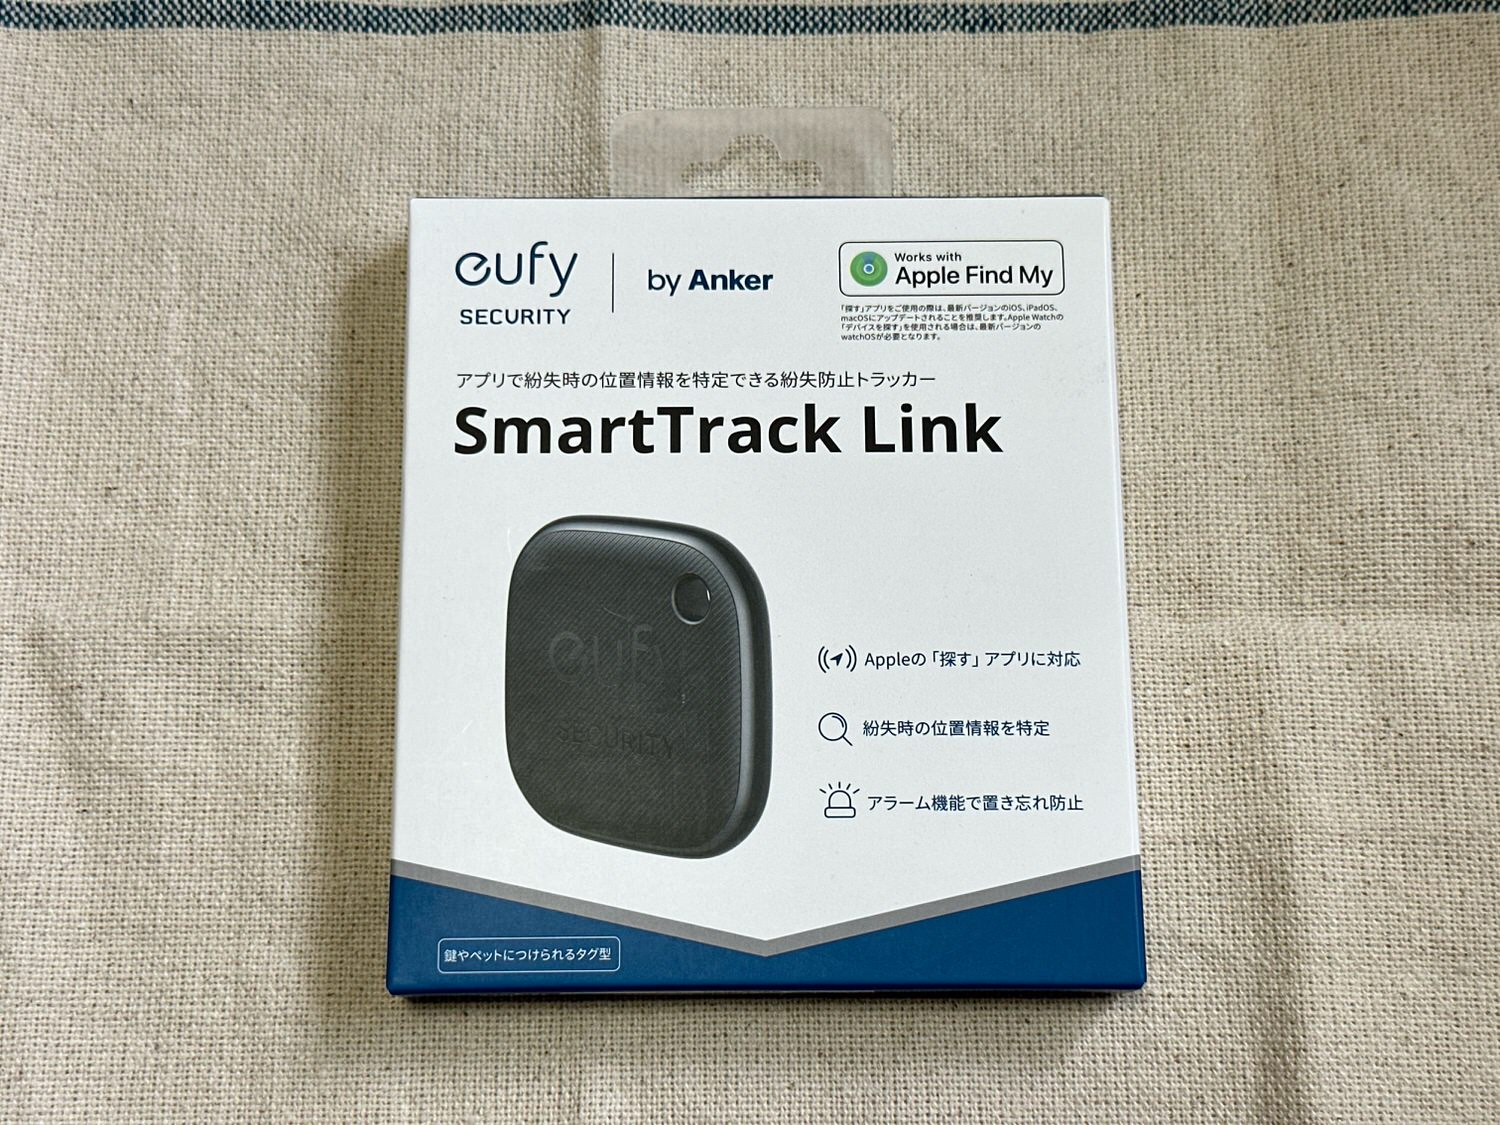 Eufy smarttrack link 000 04